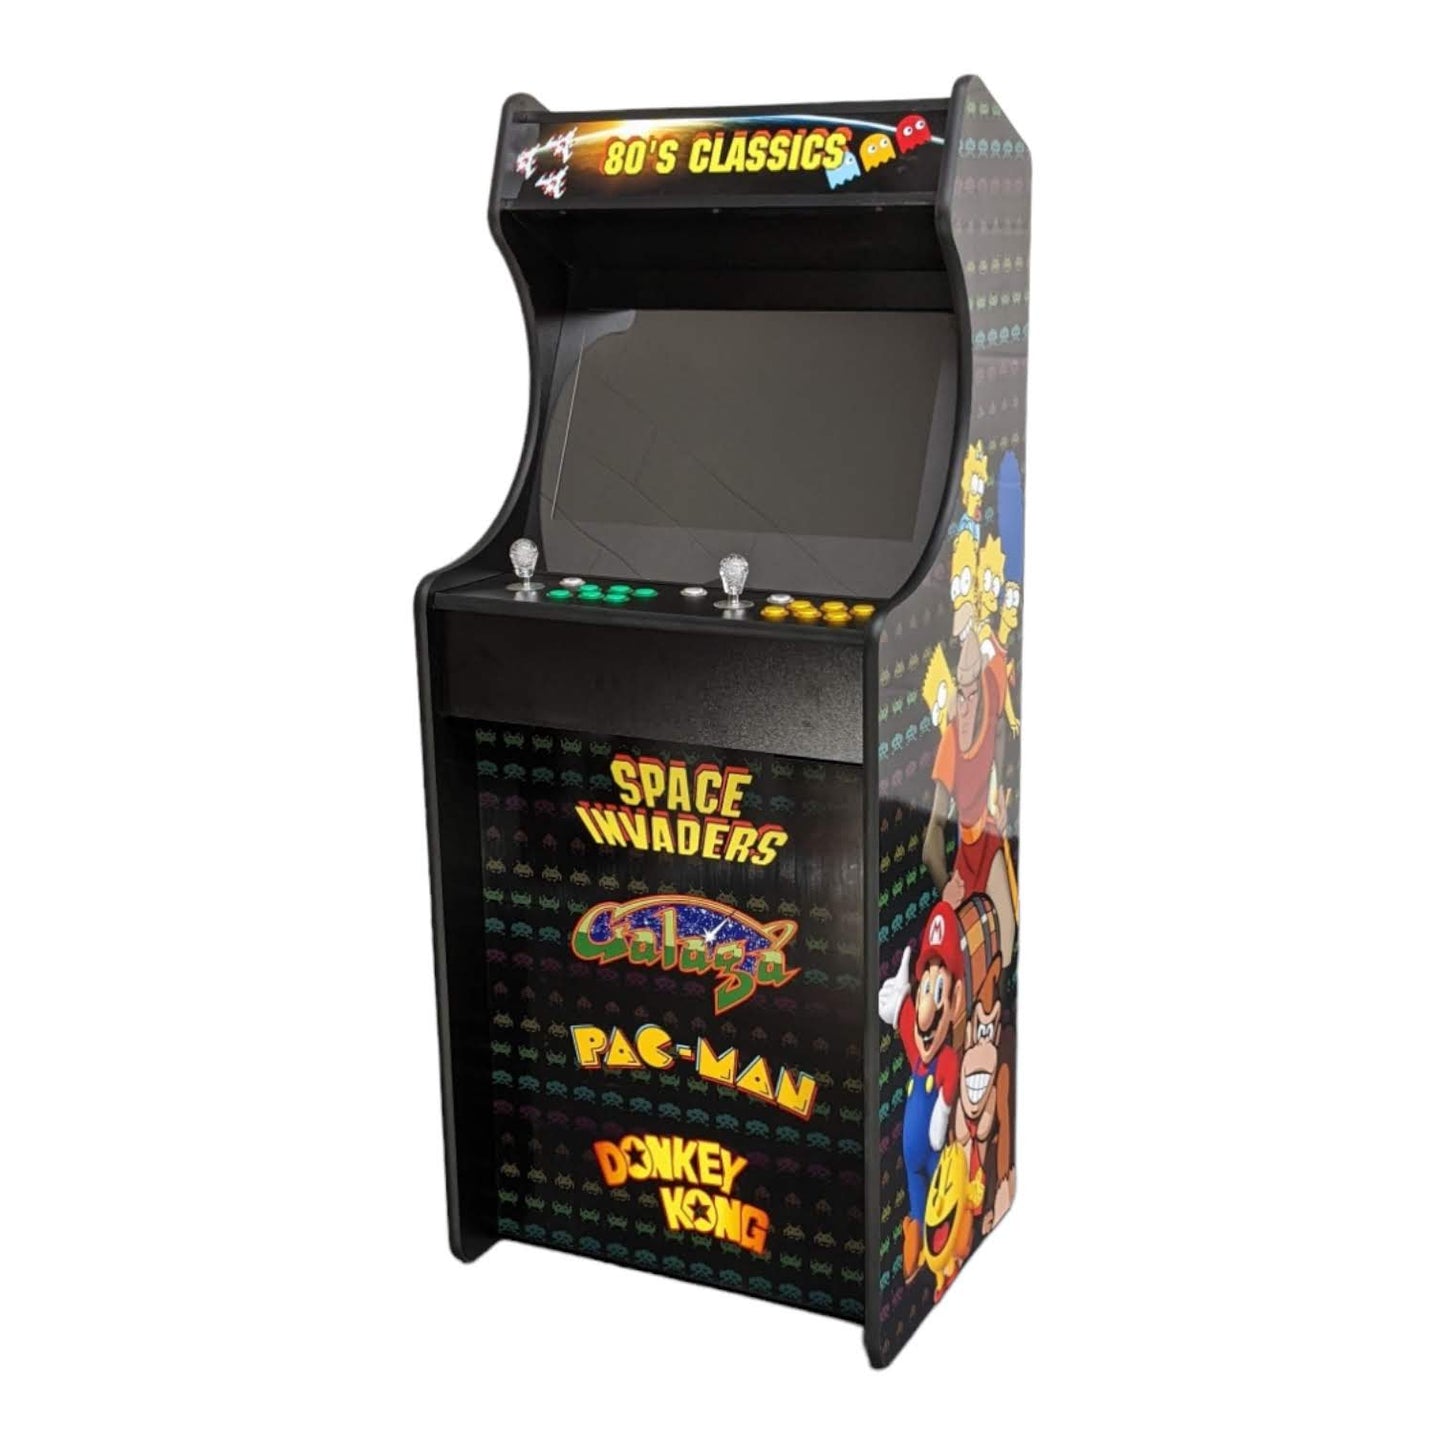 3 x Multigame Arcade Hire